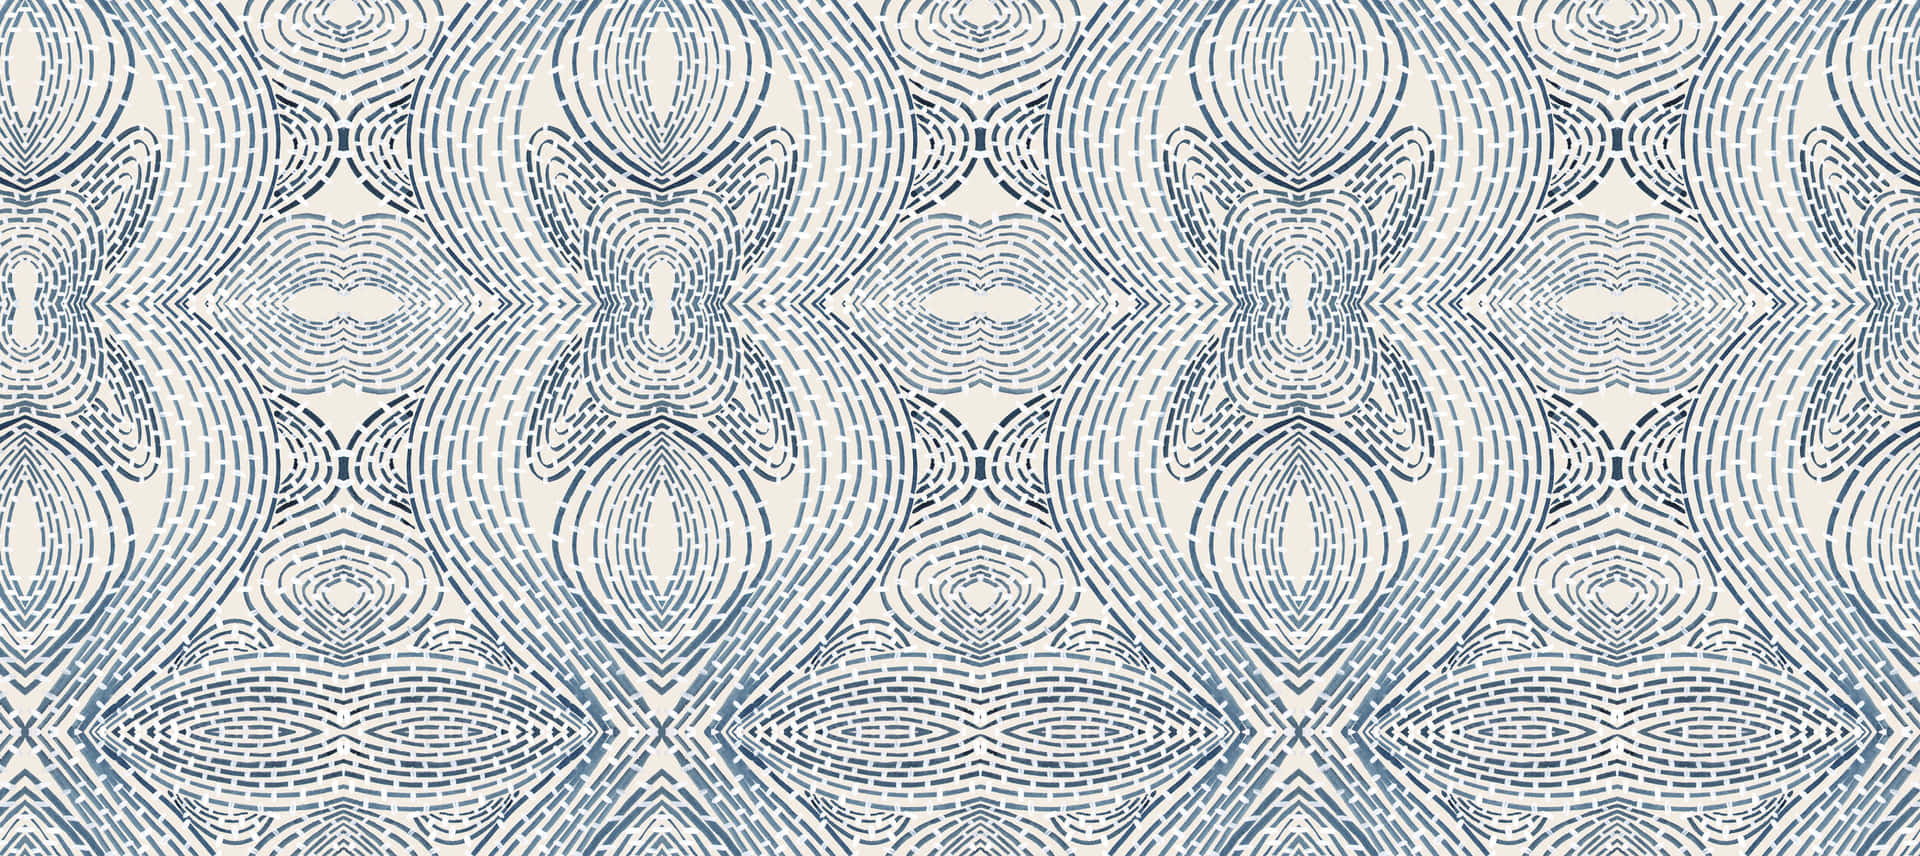 Abnormal Intricate Patterns Wallpaper